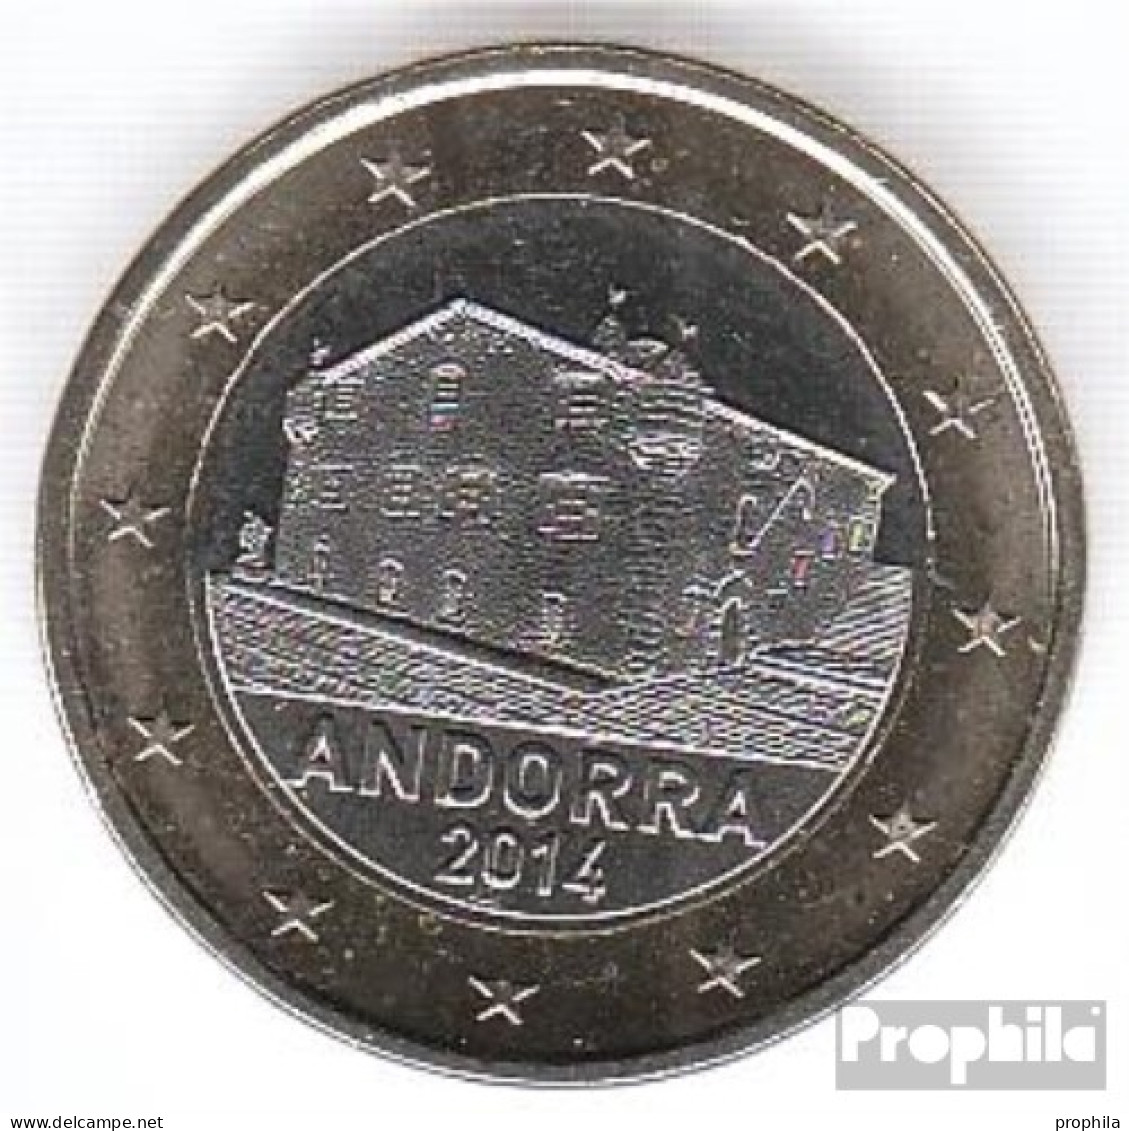 Andorra AND 7 2014 Stgl./unzirkuliert 2014 1 Euro Kursmünze - Andorra